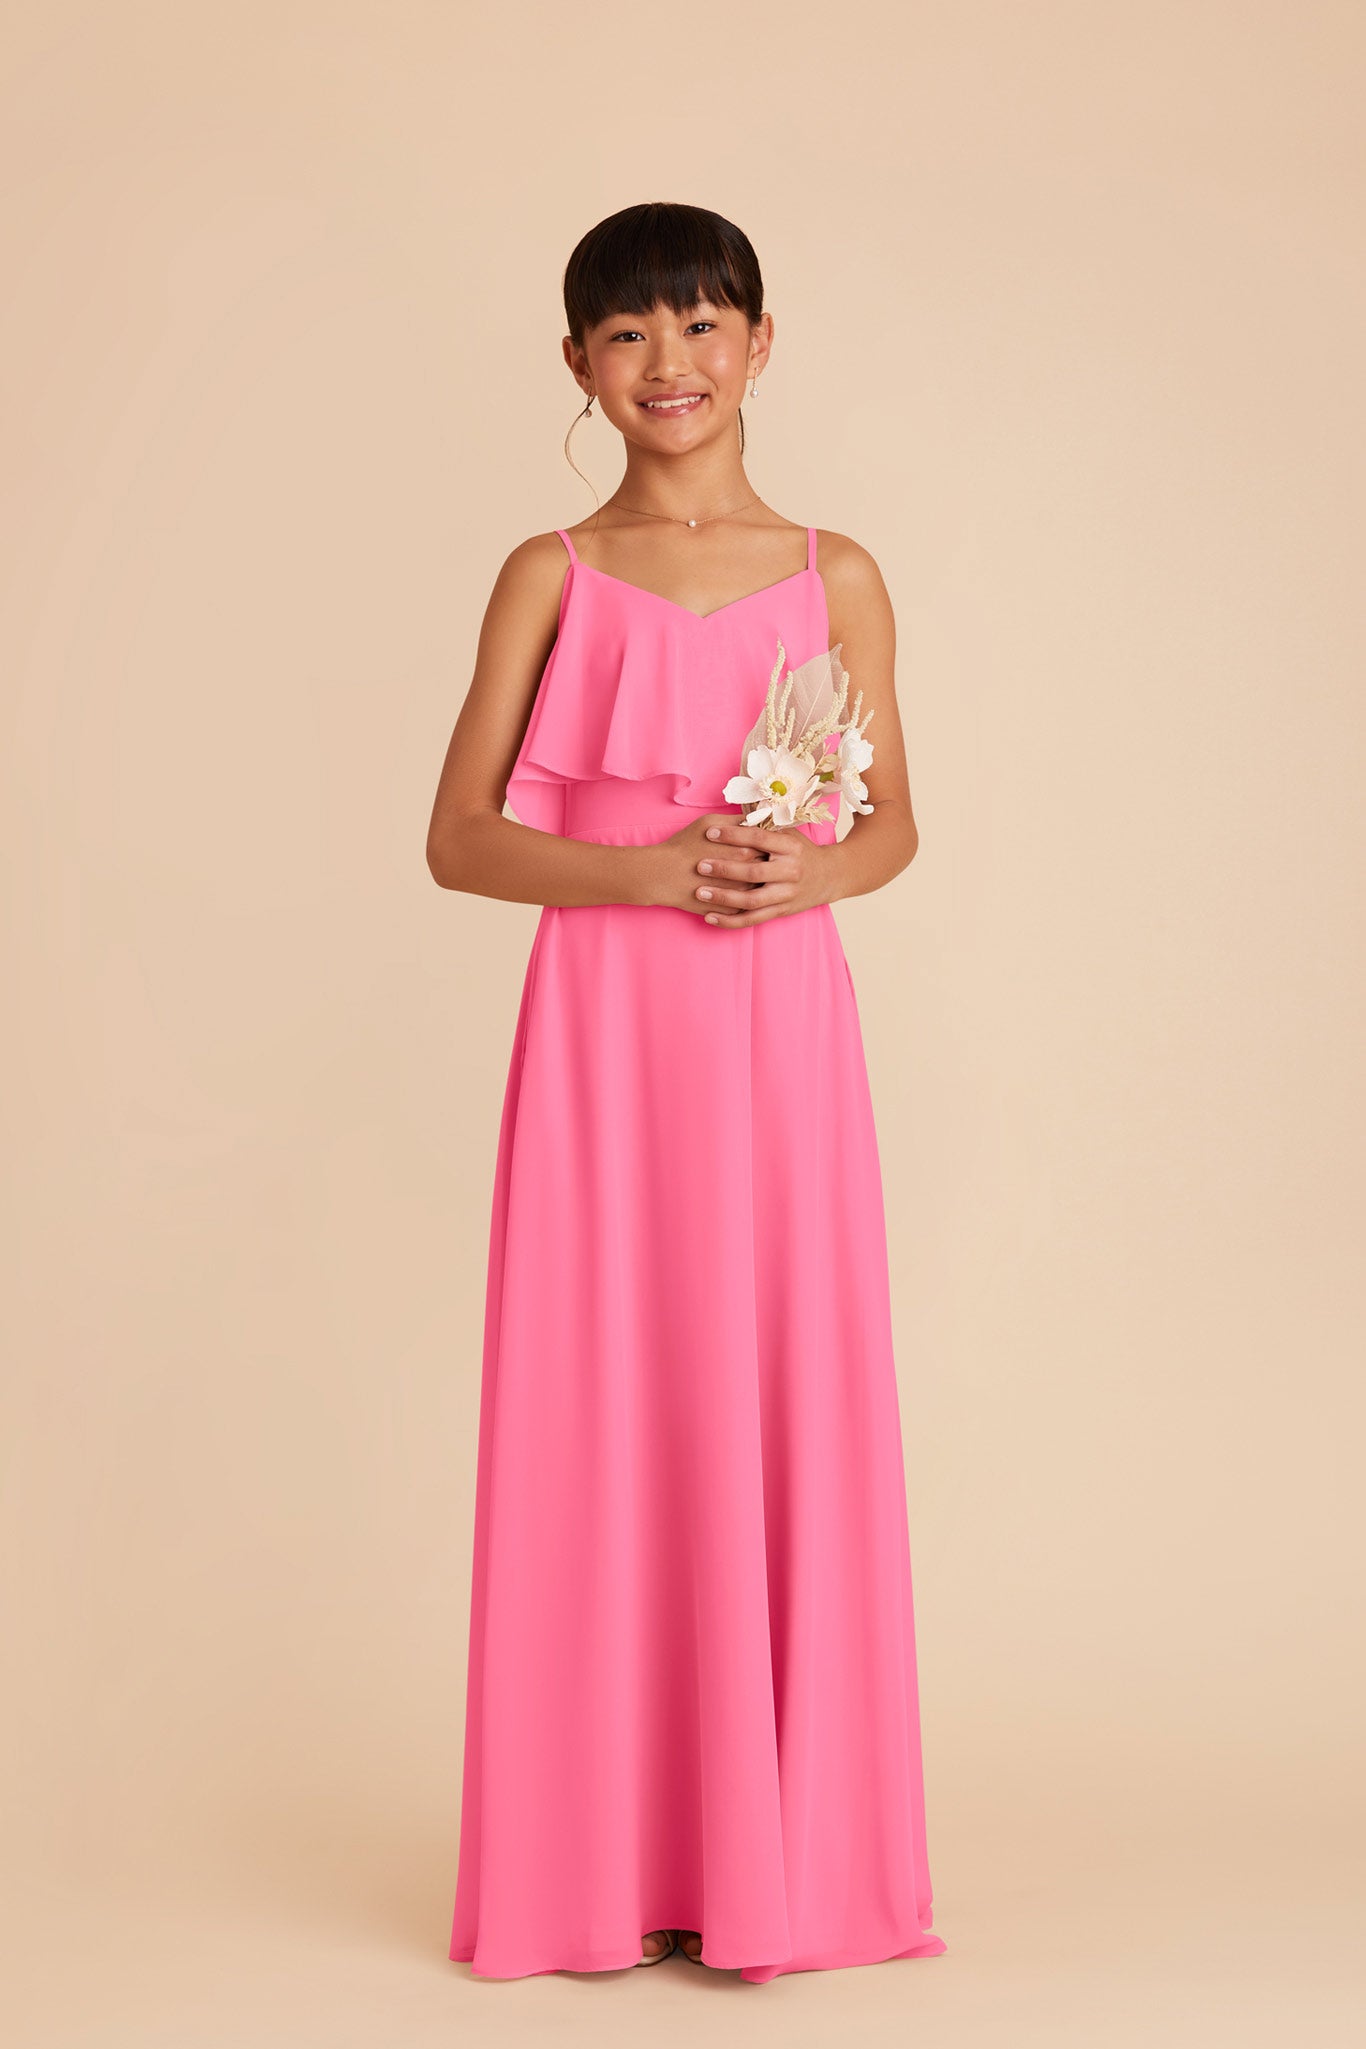 Bon Bon Pink Janie Convertible Junior Dress by Birdy Grey